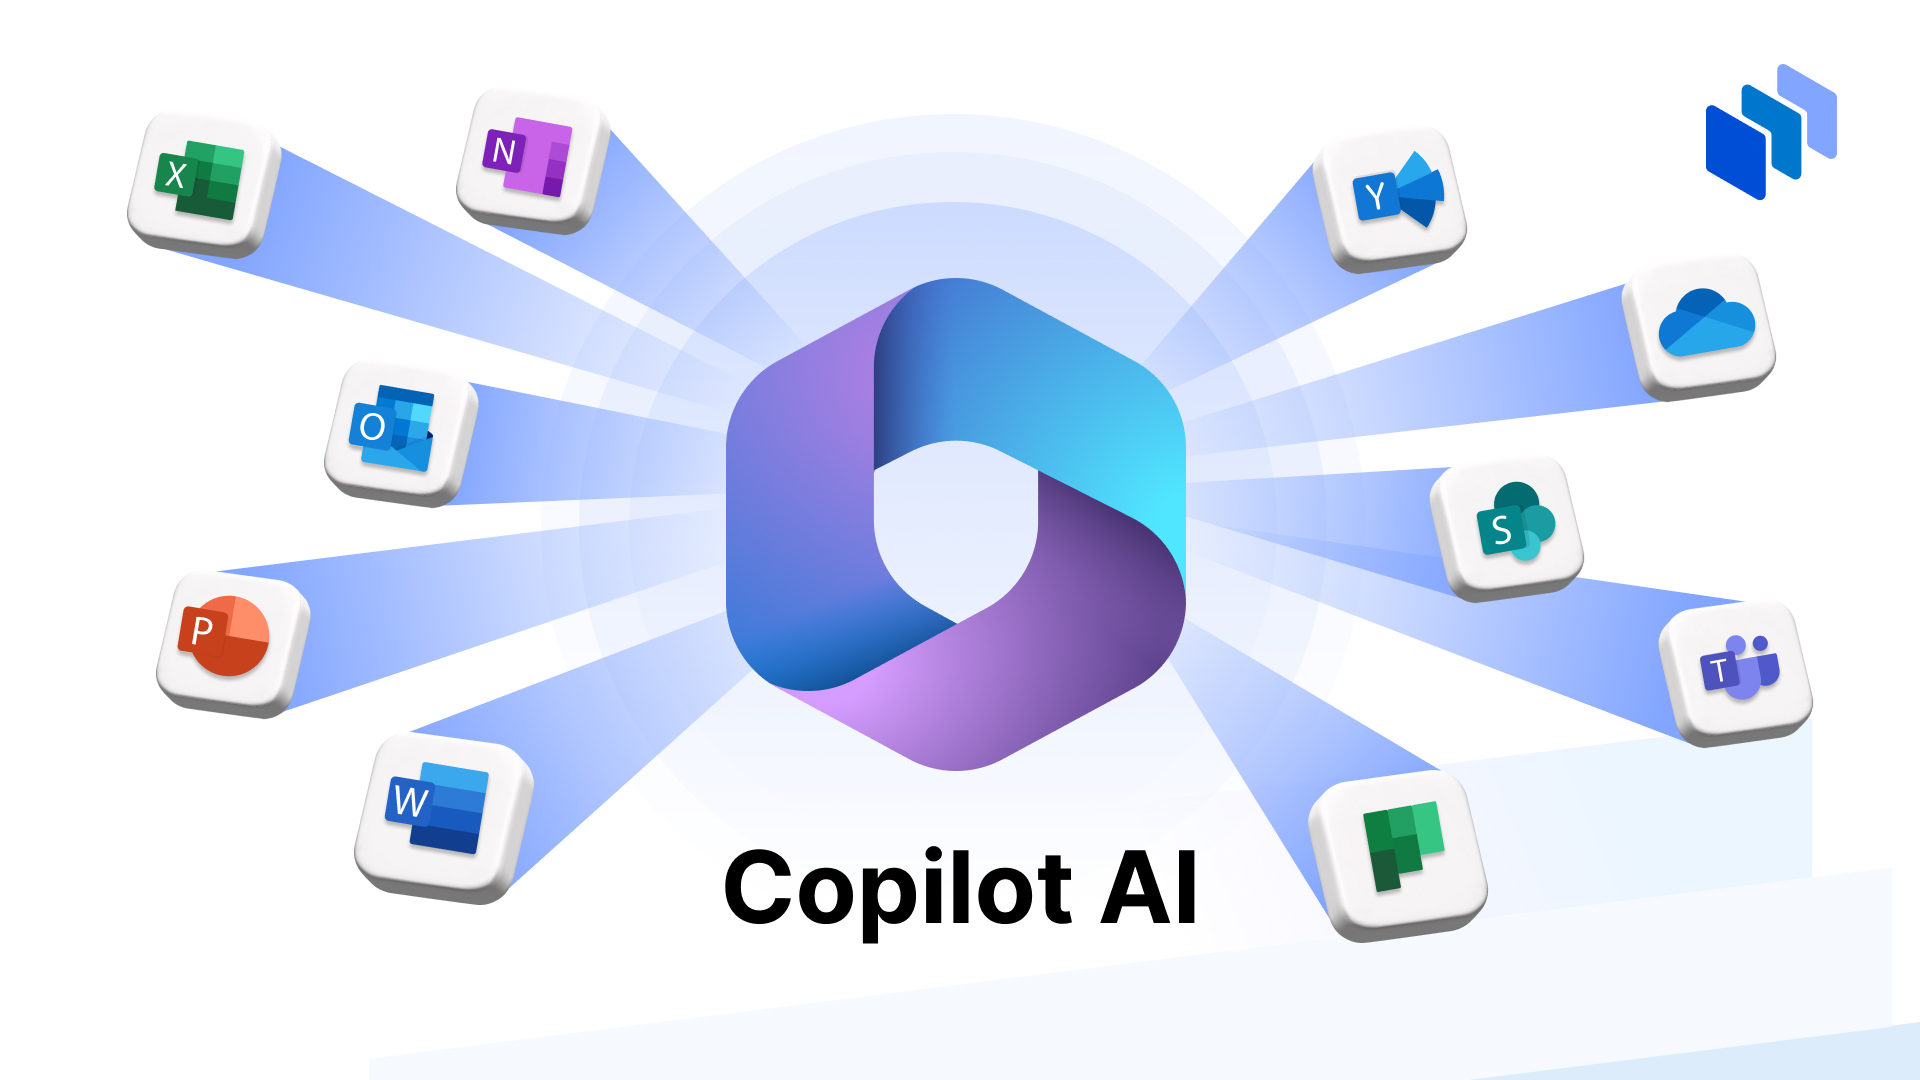 Use Cases of Copilot AI